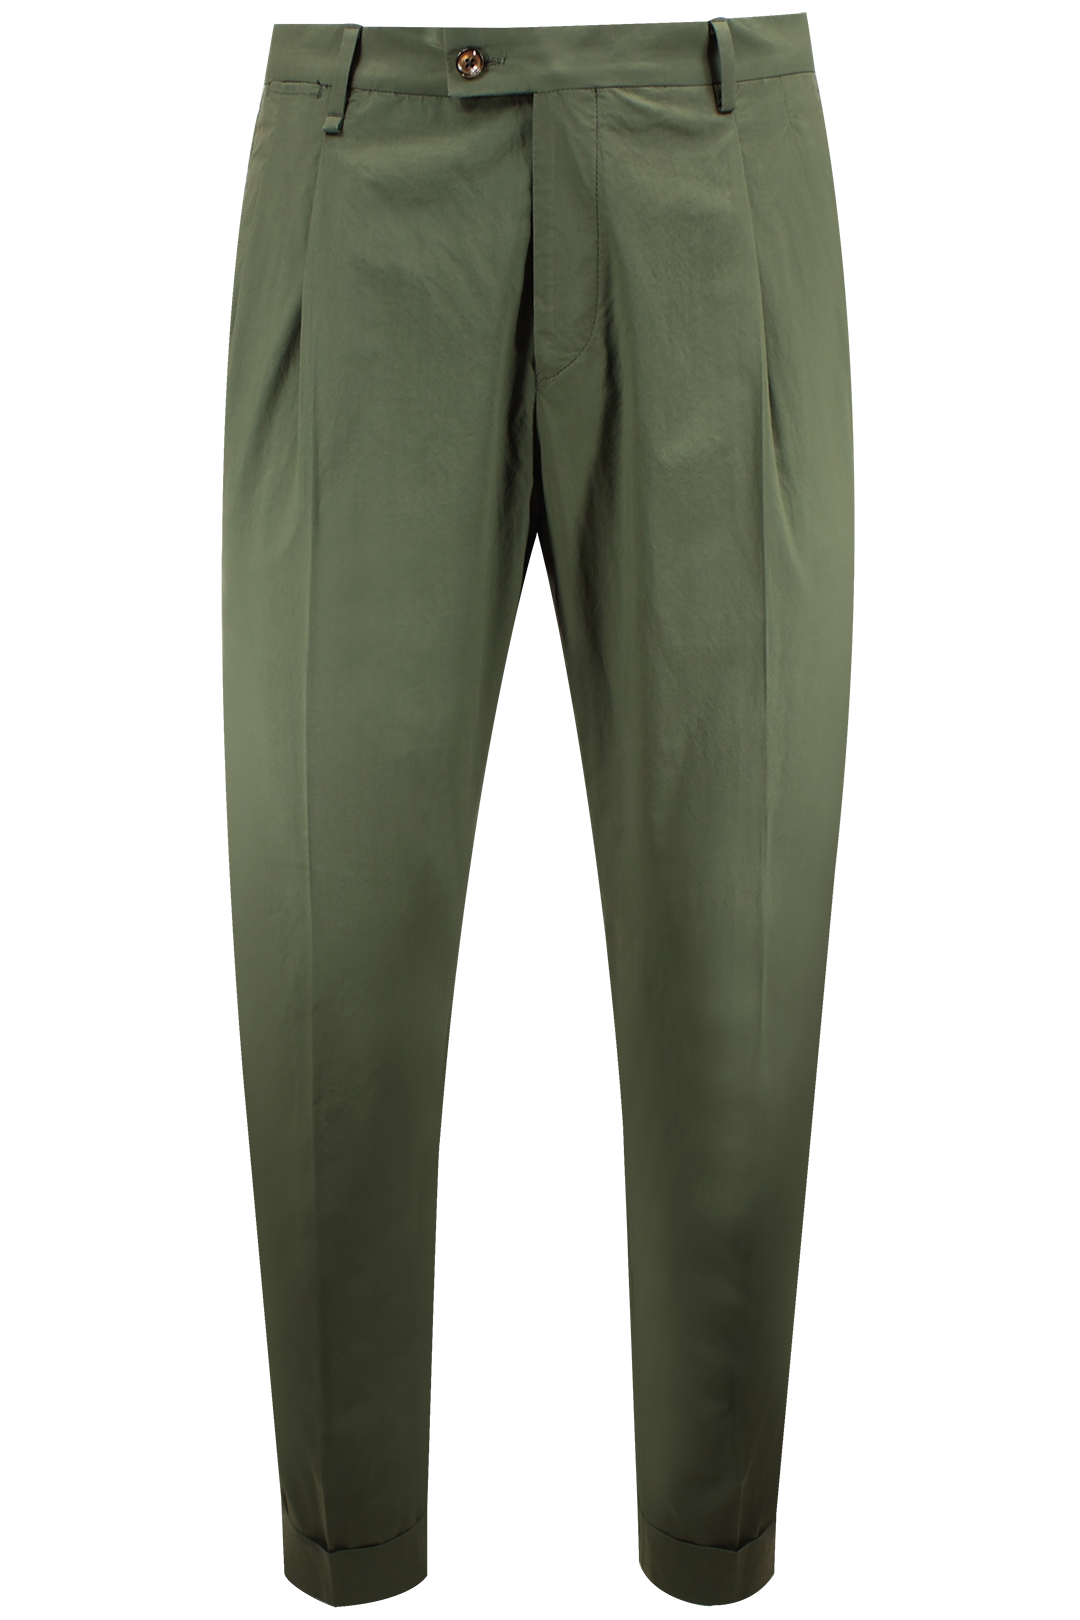 Pantalone con due pinces in cotone verde